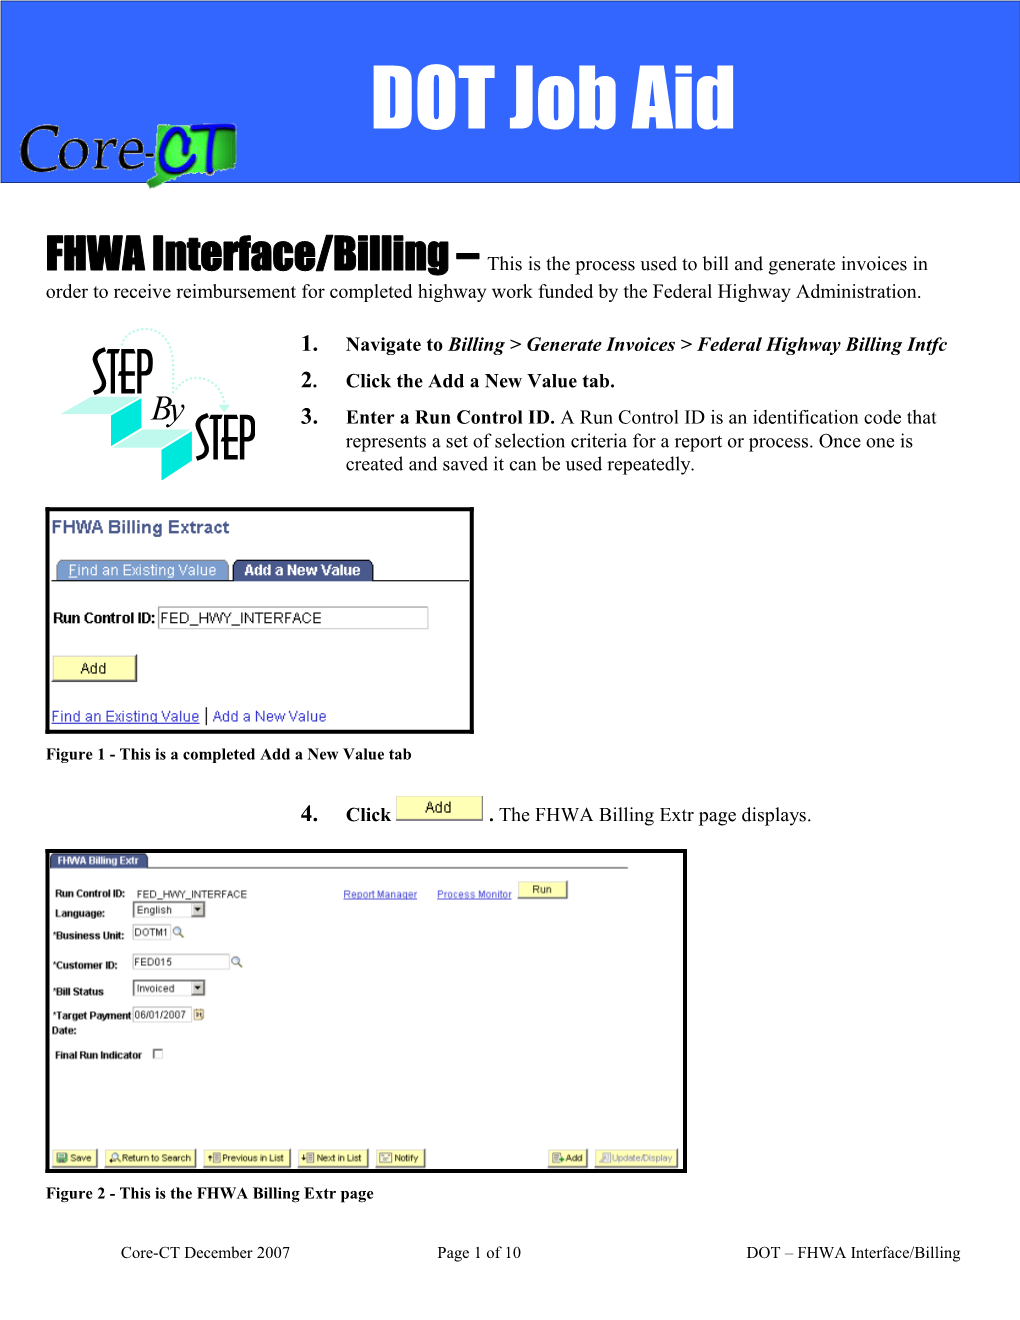 FHWA Interface/Billing